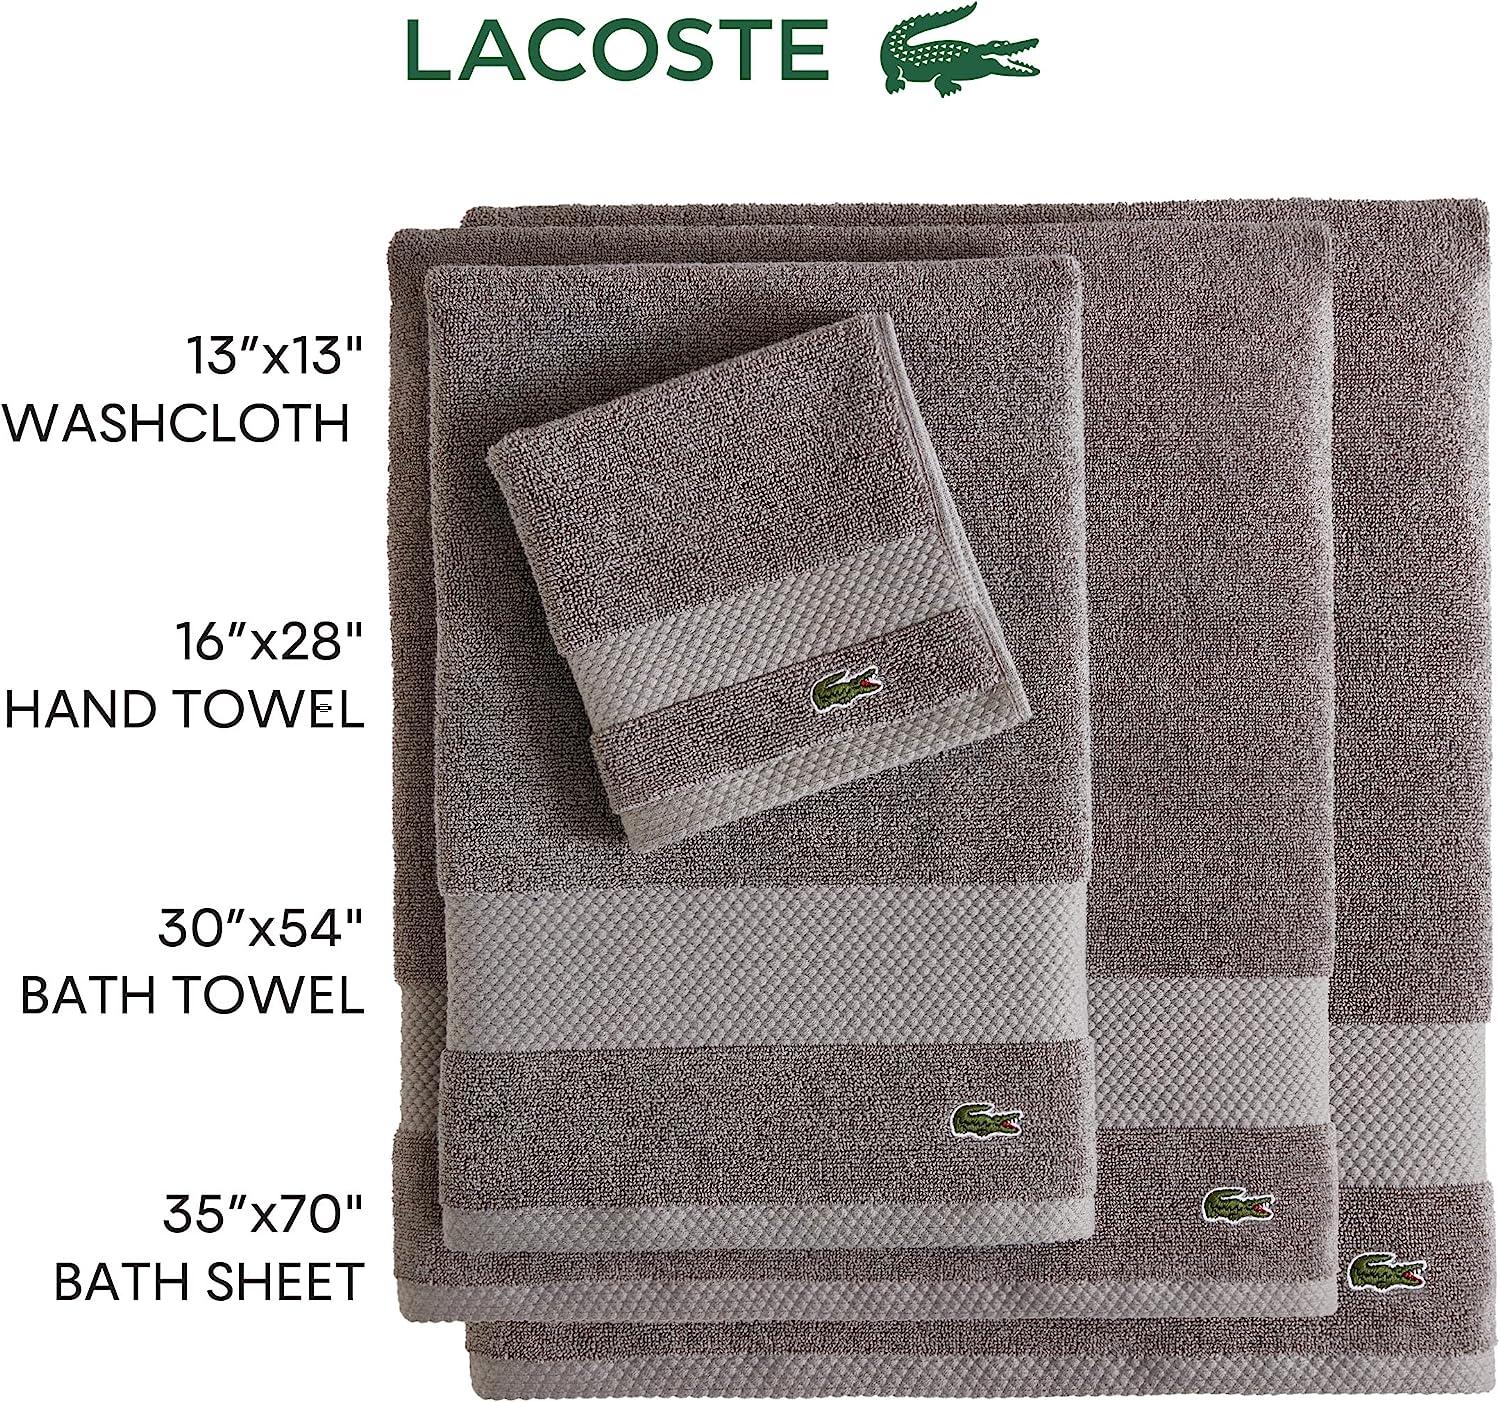 Lacoste Home Duke Cotton Beach Towel